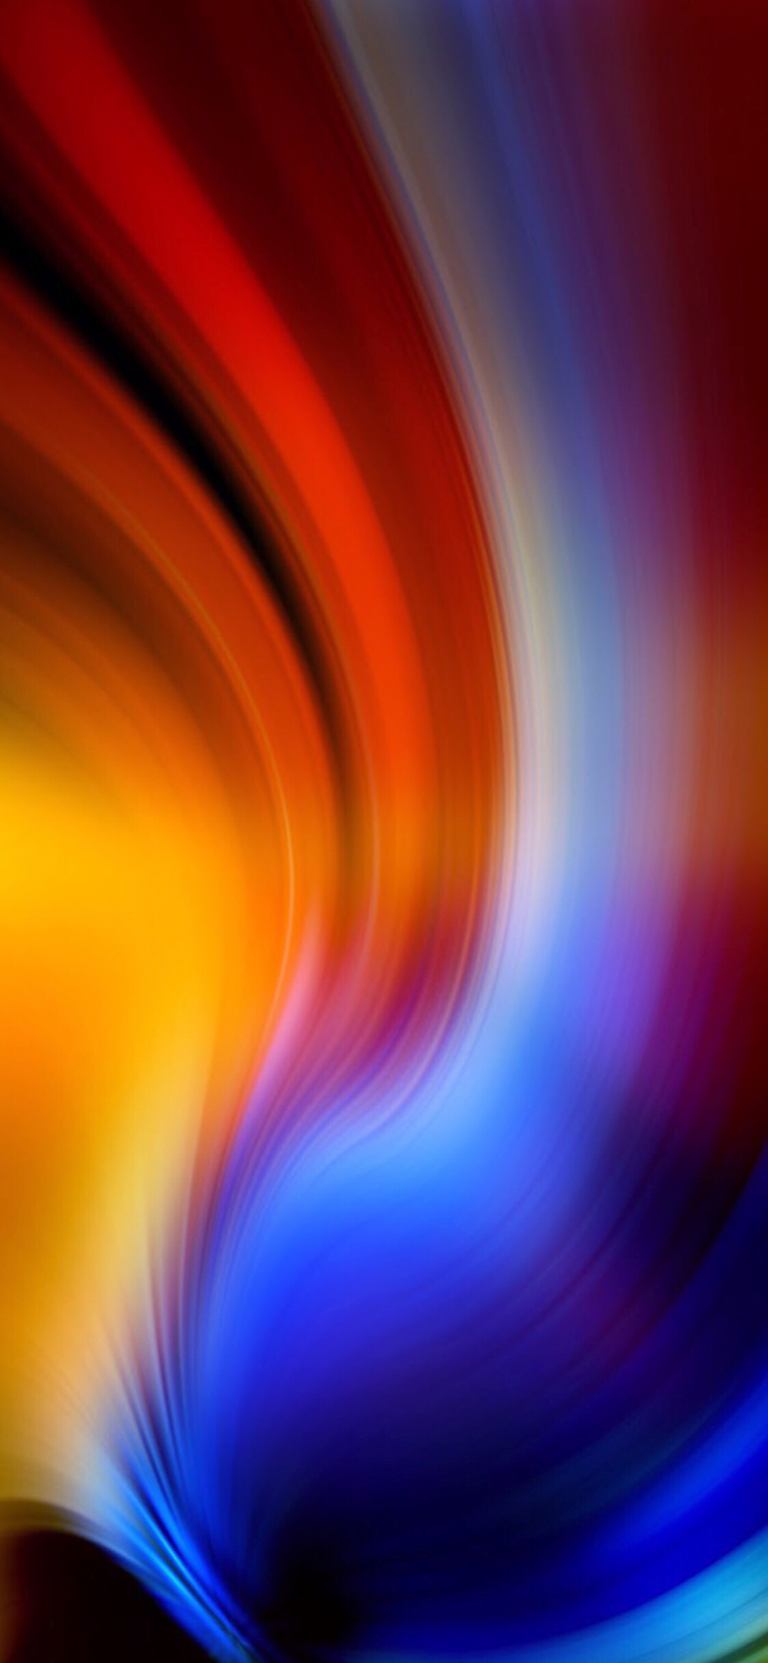 The orange to blue blur | Zollotech